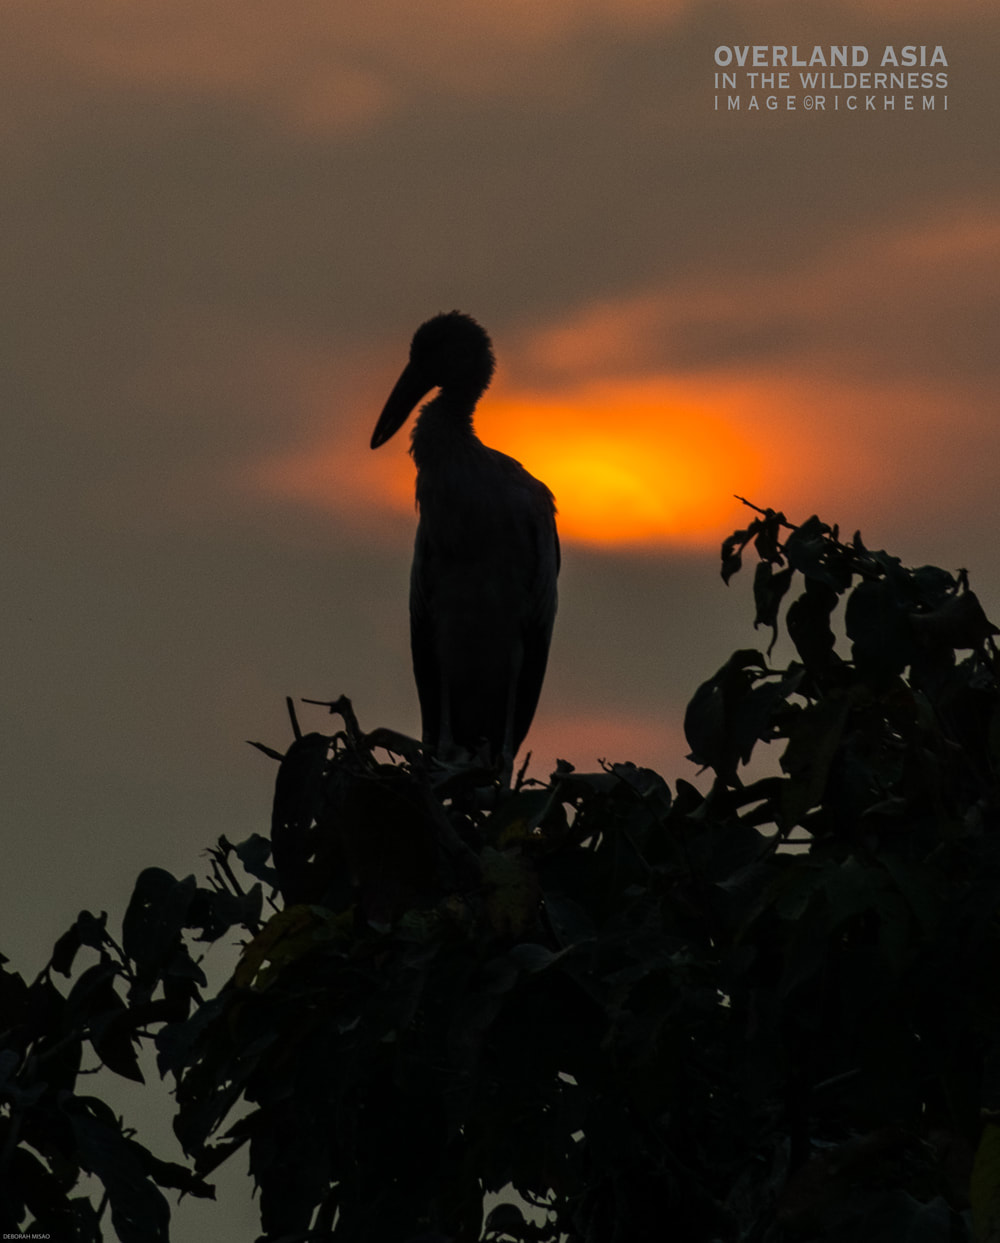 solo travel Asia, wildlife wilderness silhouette Asia, image by Rick Hemi